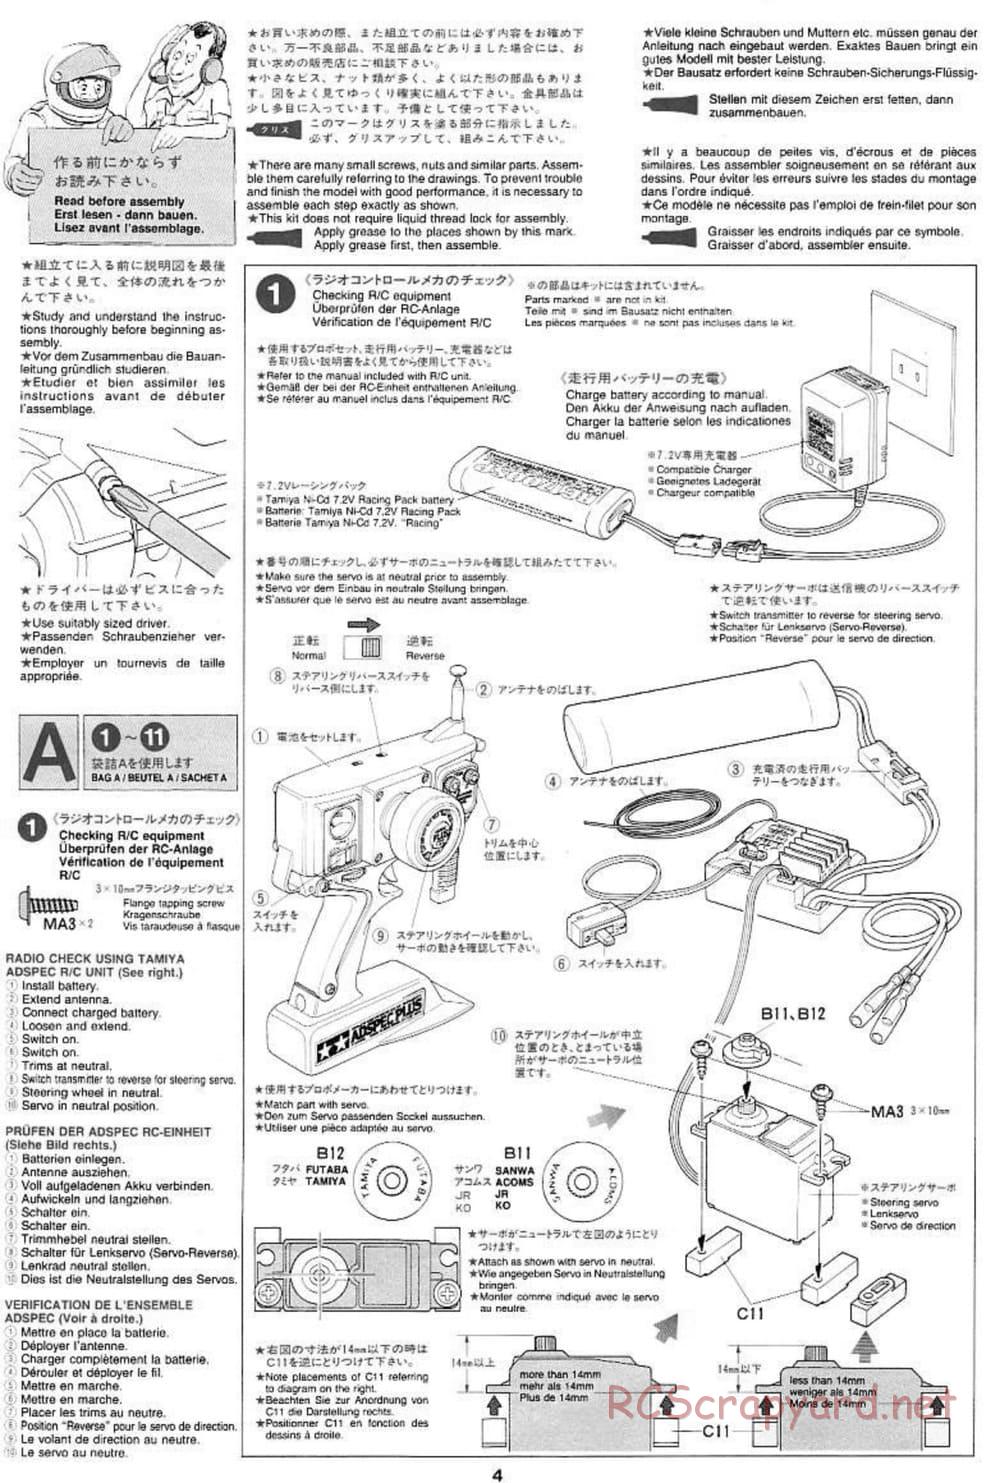 Tamiya - Ford SVT F-150 Lightning - TL-01 Chassis - Manual - Page 4